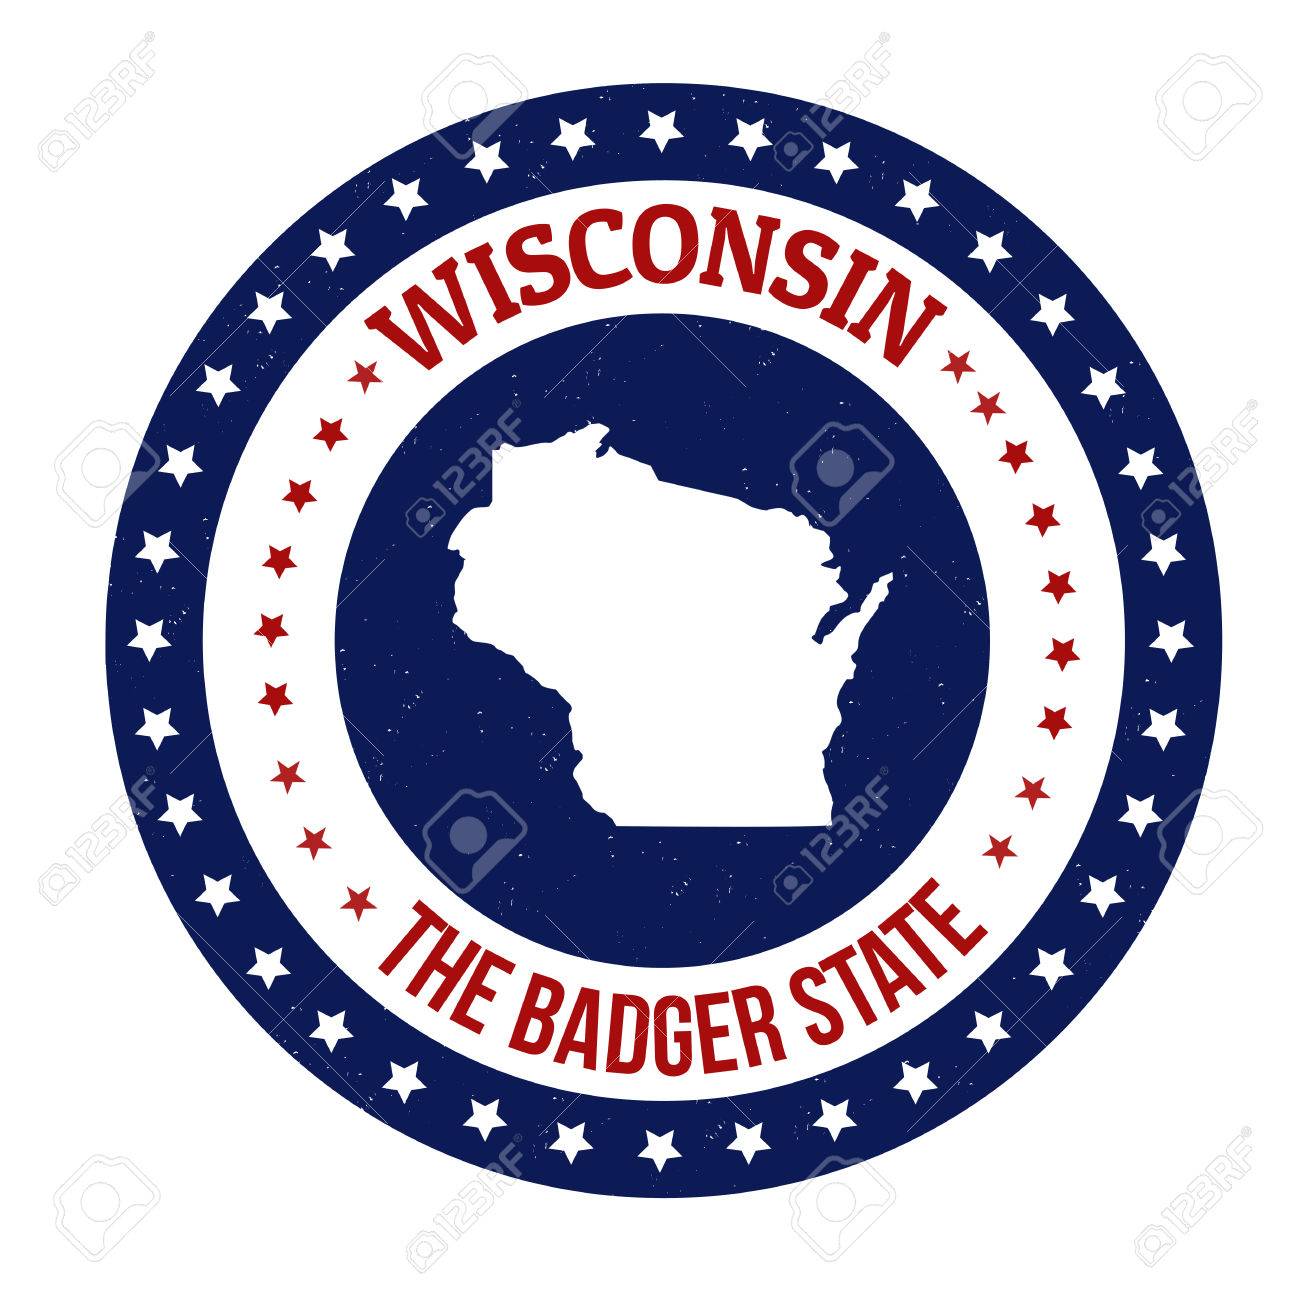 badger state